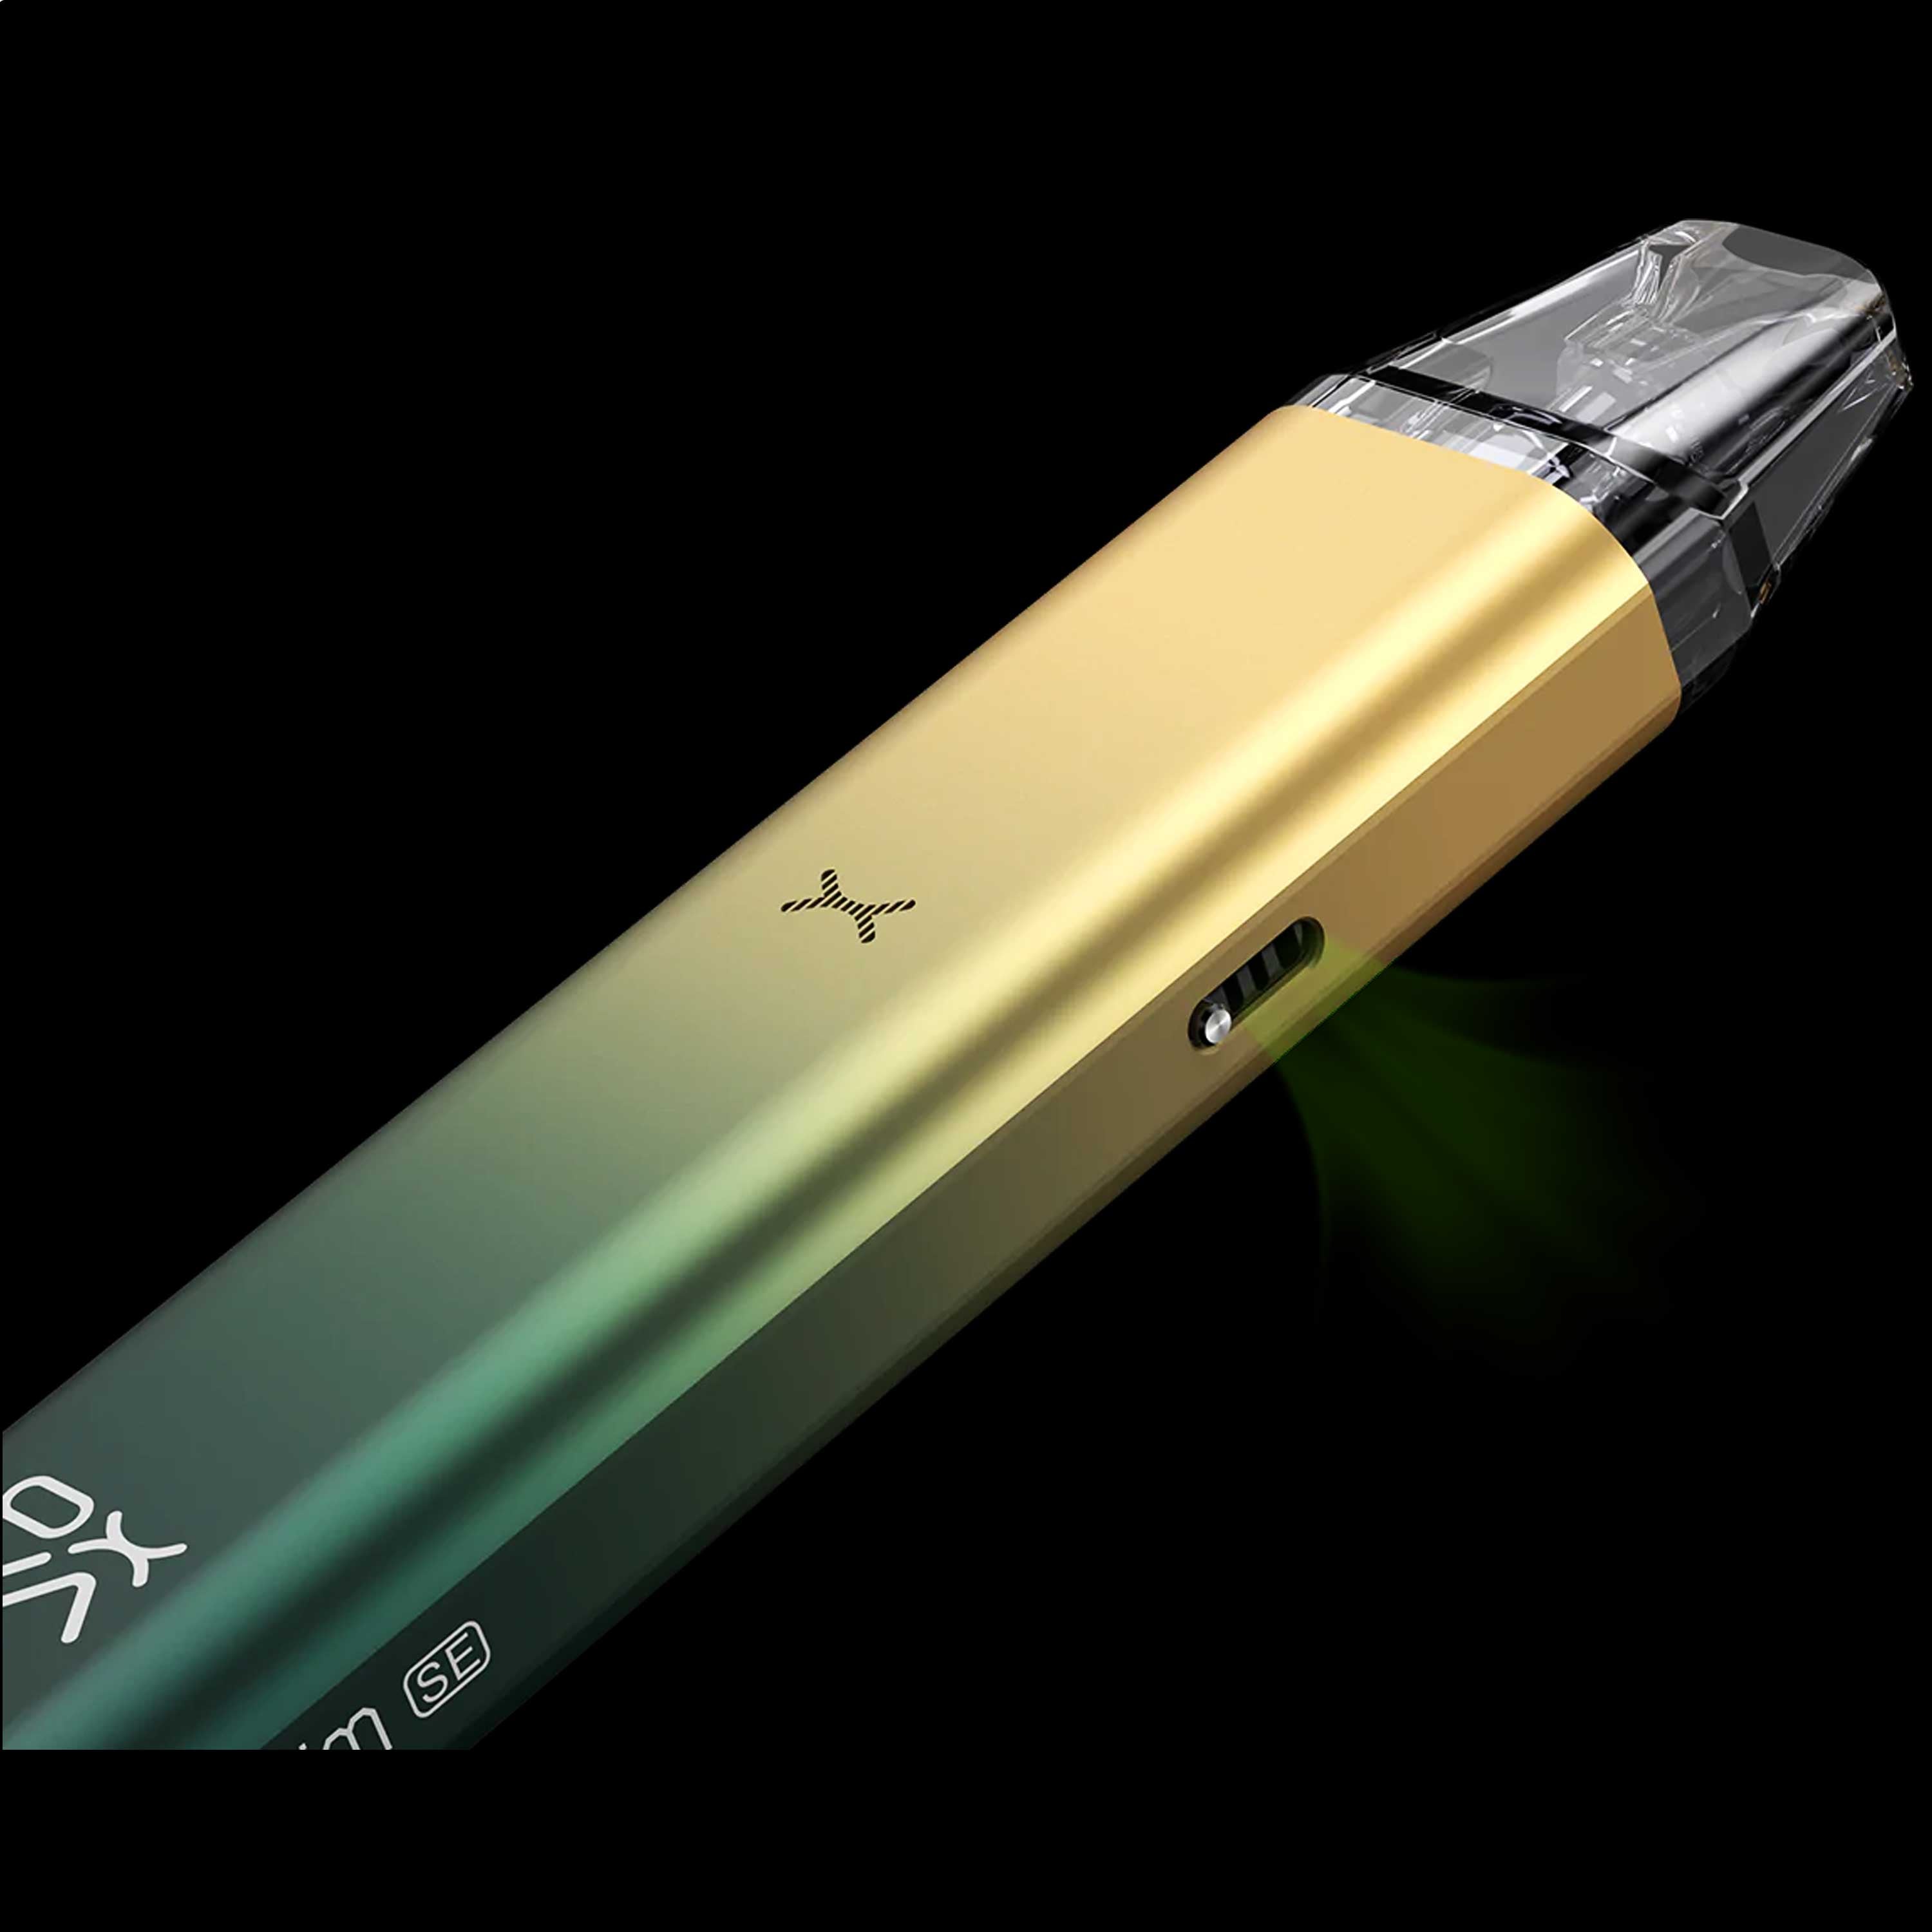 OXVA - Xlim SE Kit (2 ml) 900 mAh - E-Zigarette